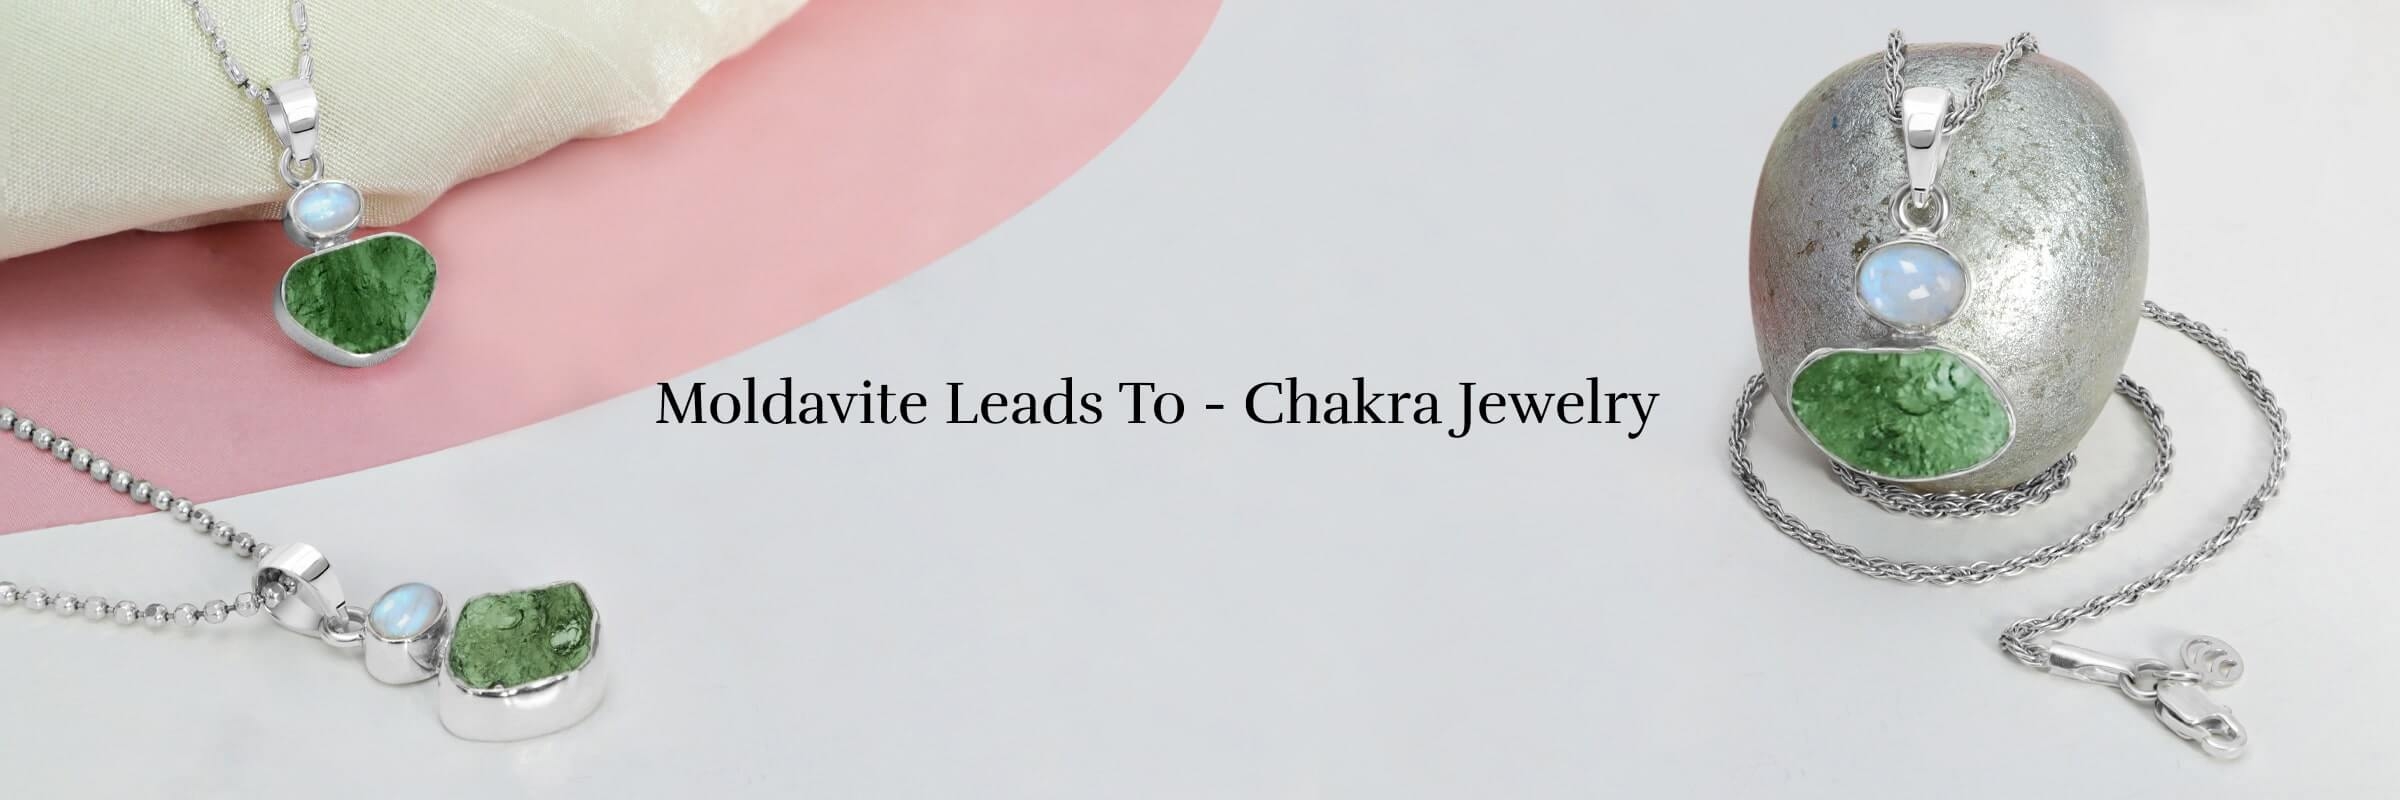 Moldavite Jewelry Helps In Balancing The Chakras